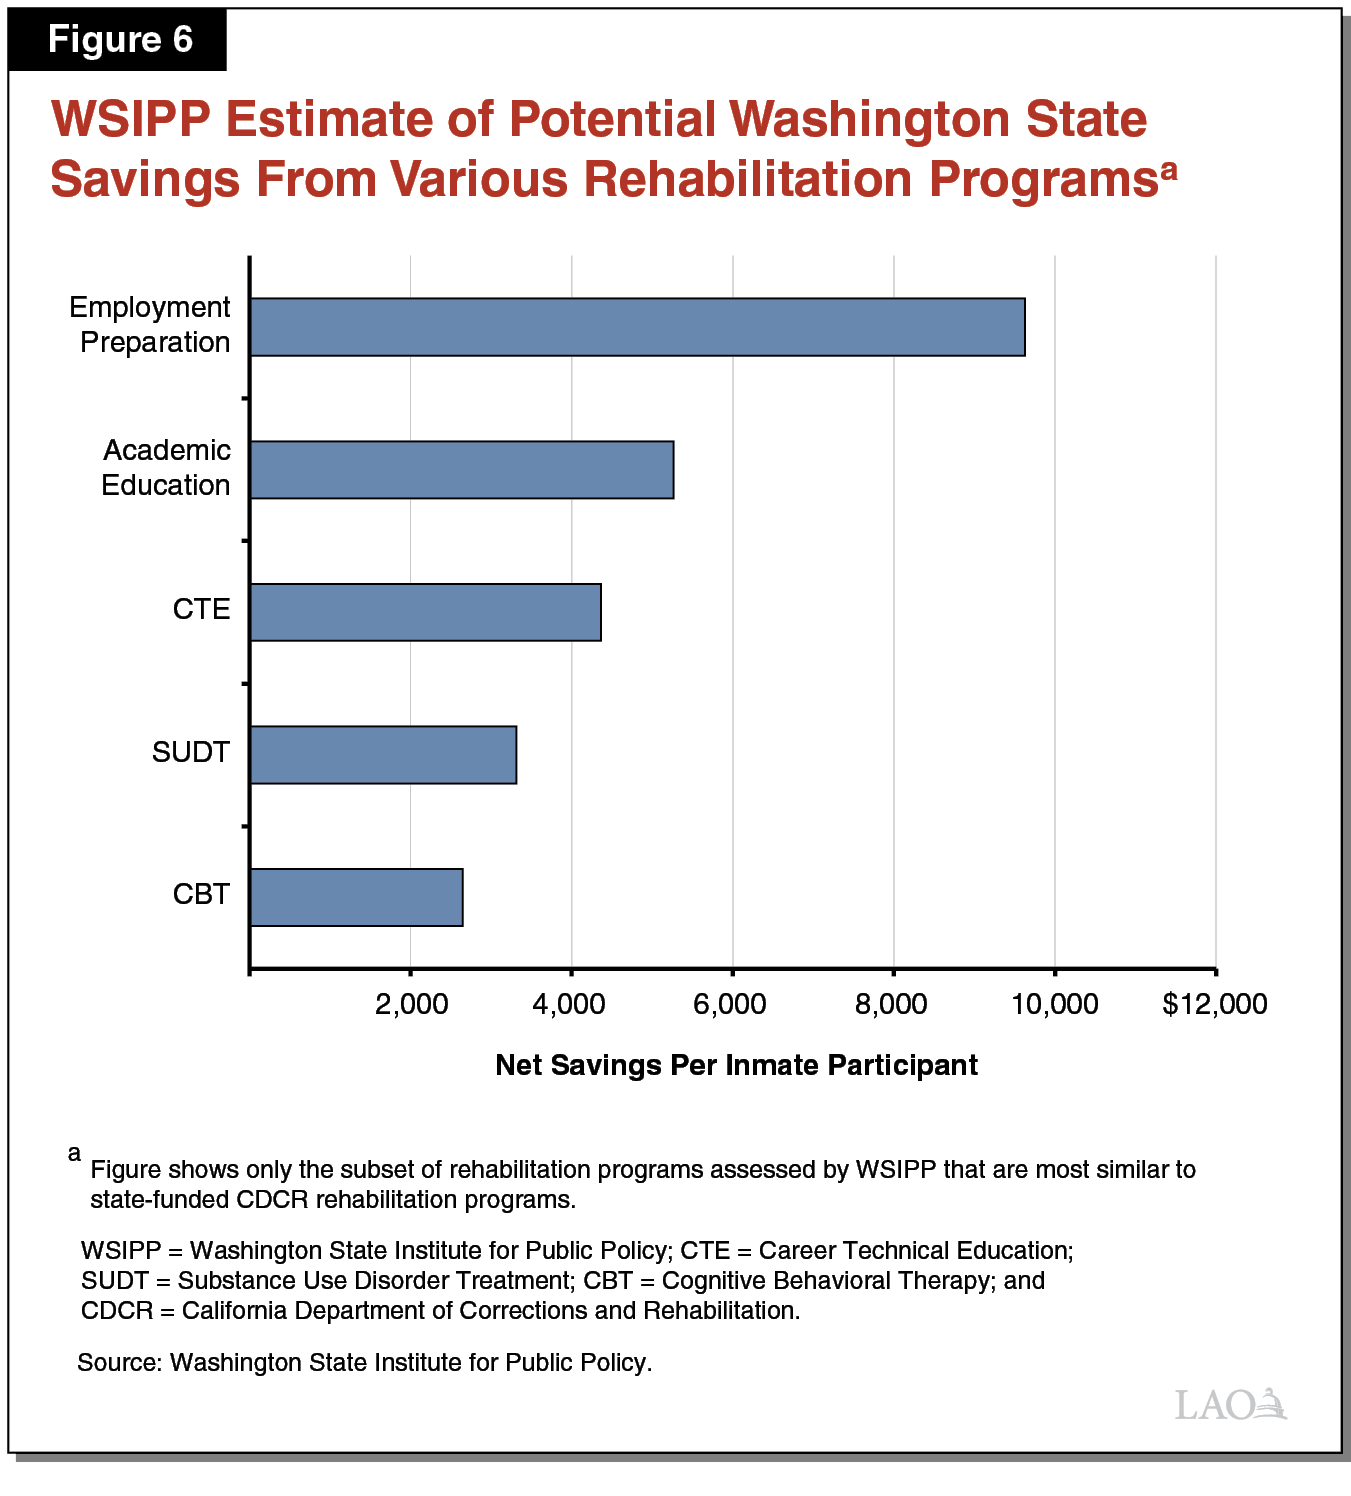 Figure 6 - WSIPP Estimate of Potential Washington State Savings from Various Rehabiliation Programs